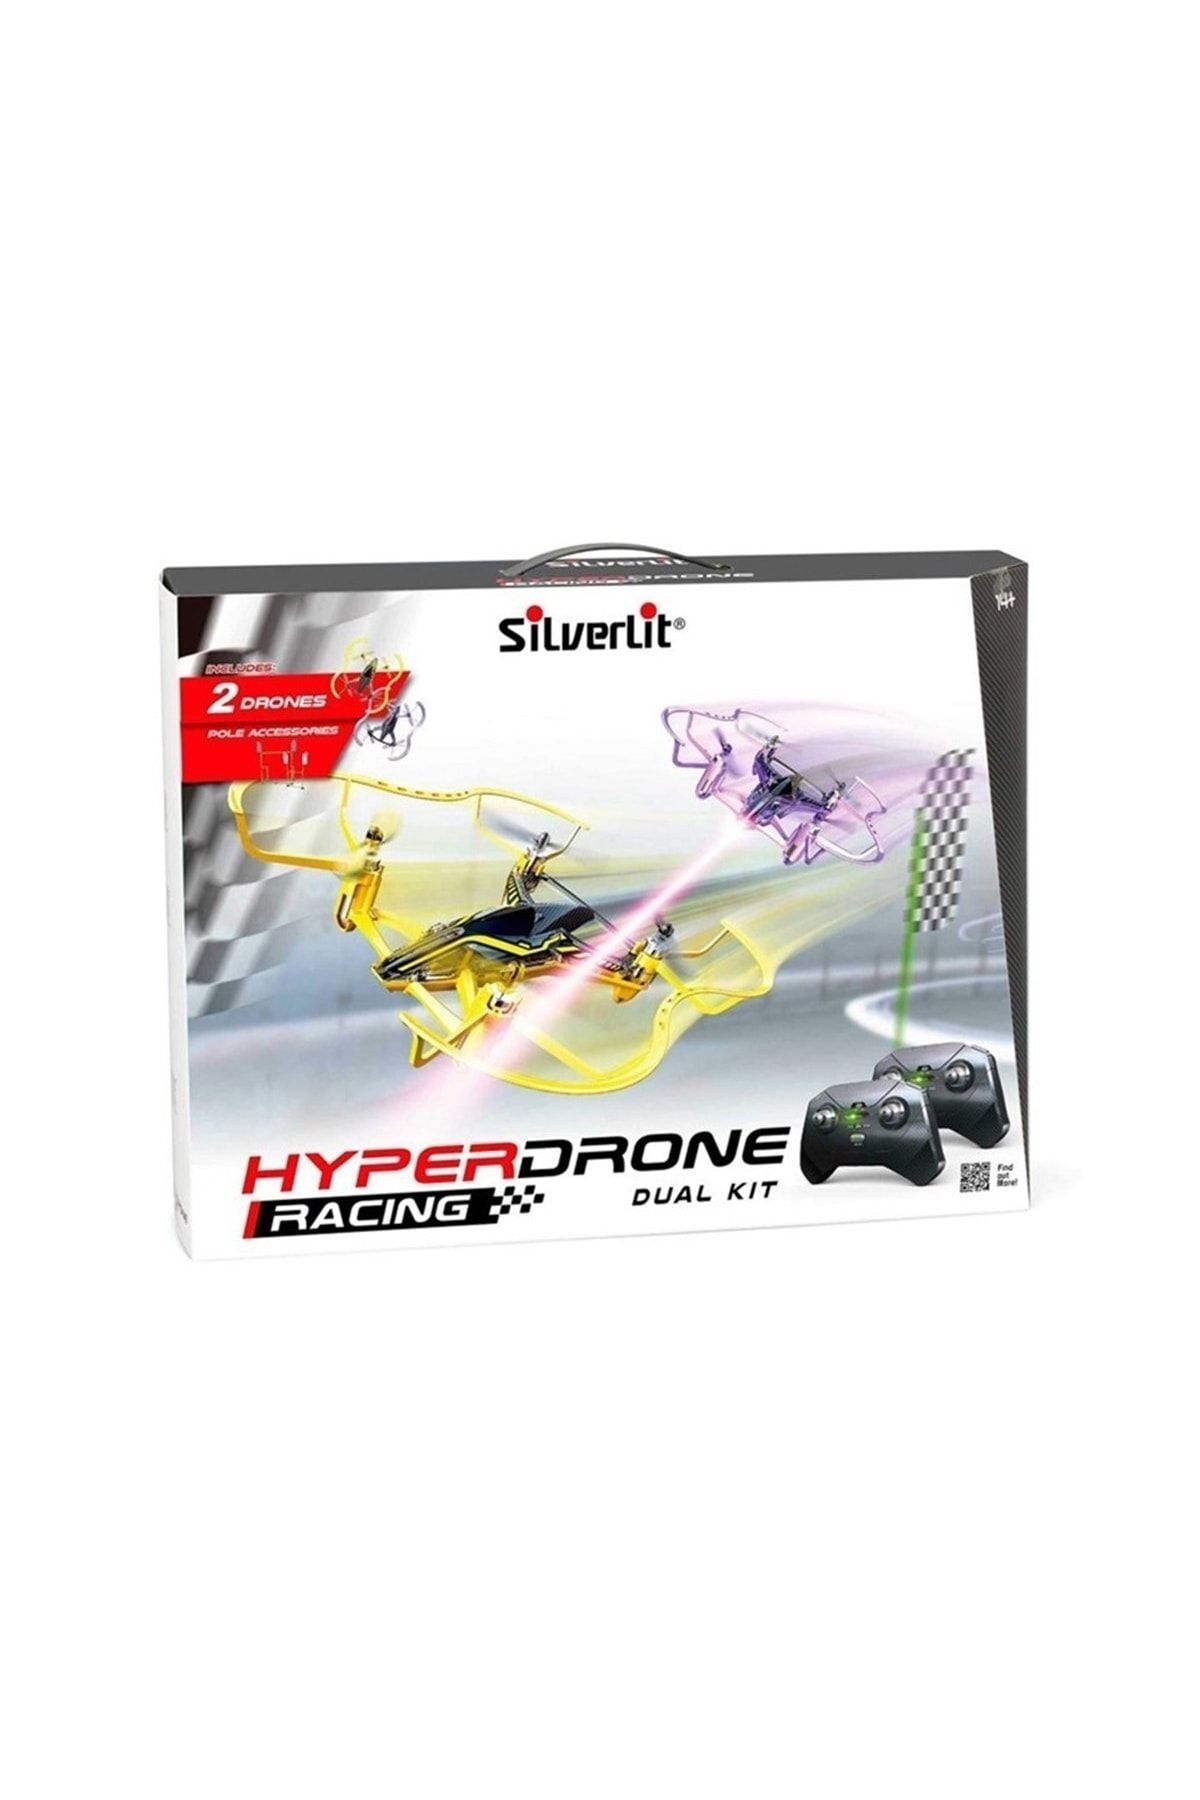 Muhcu Home Sıl/84789 Silverlit Hyperdrone Yarış Büyük Kit 2.4g - 4ch Gyro-çift Drone